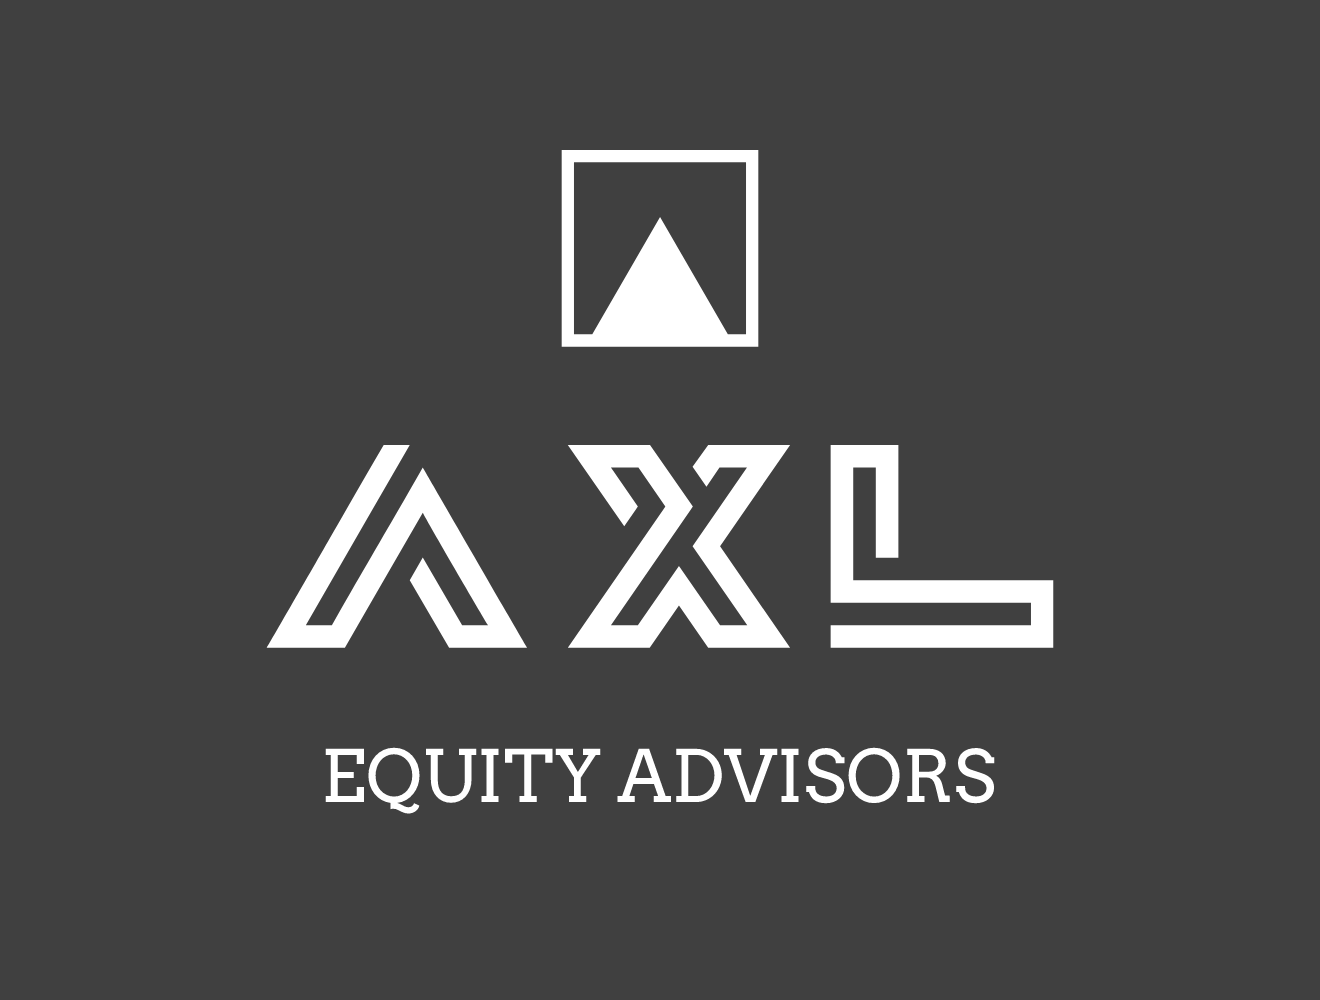 AXL Equity Advisors